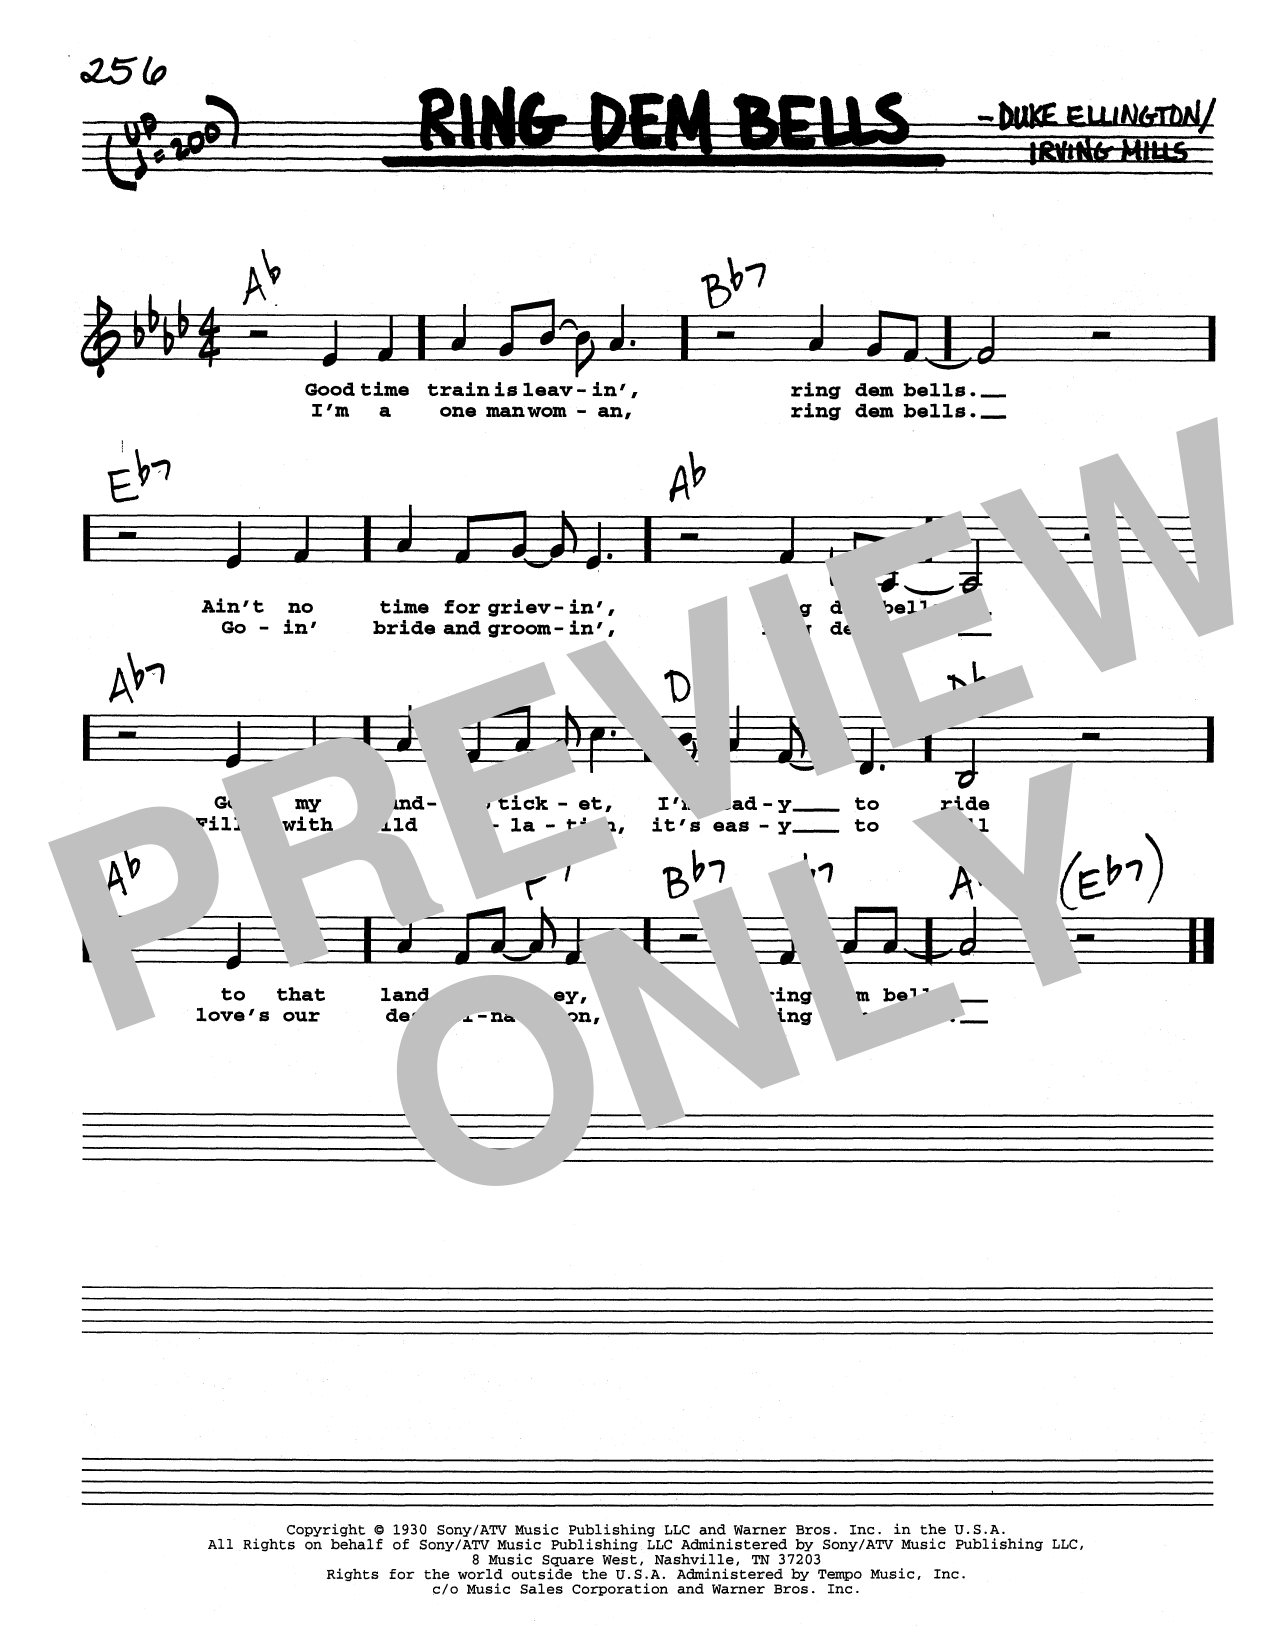 Duke Ellington Ring Dem Bells (Low Voice) Sheet Music Notes & Chords for Real Book – Melody, Lyrics & Chords - Download or Print PDF